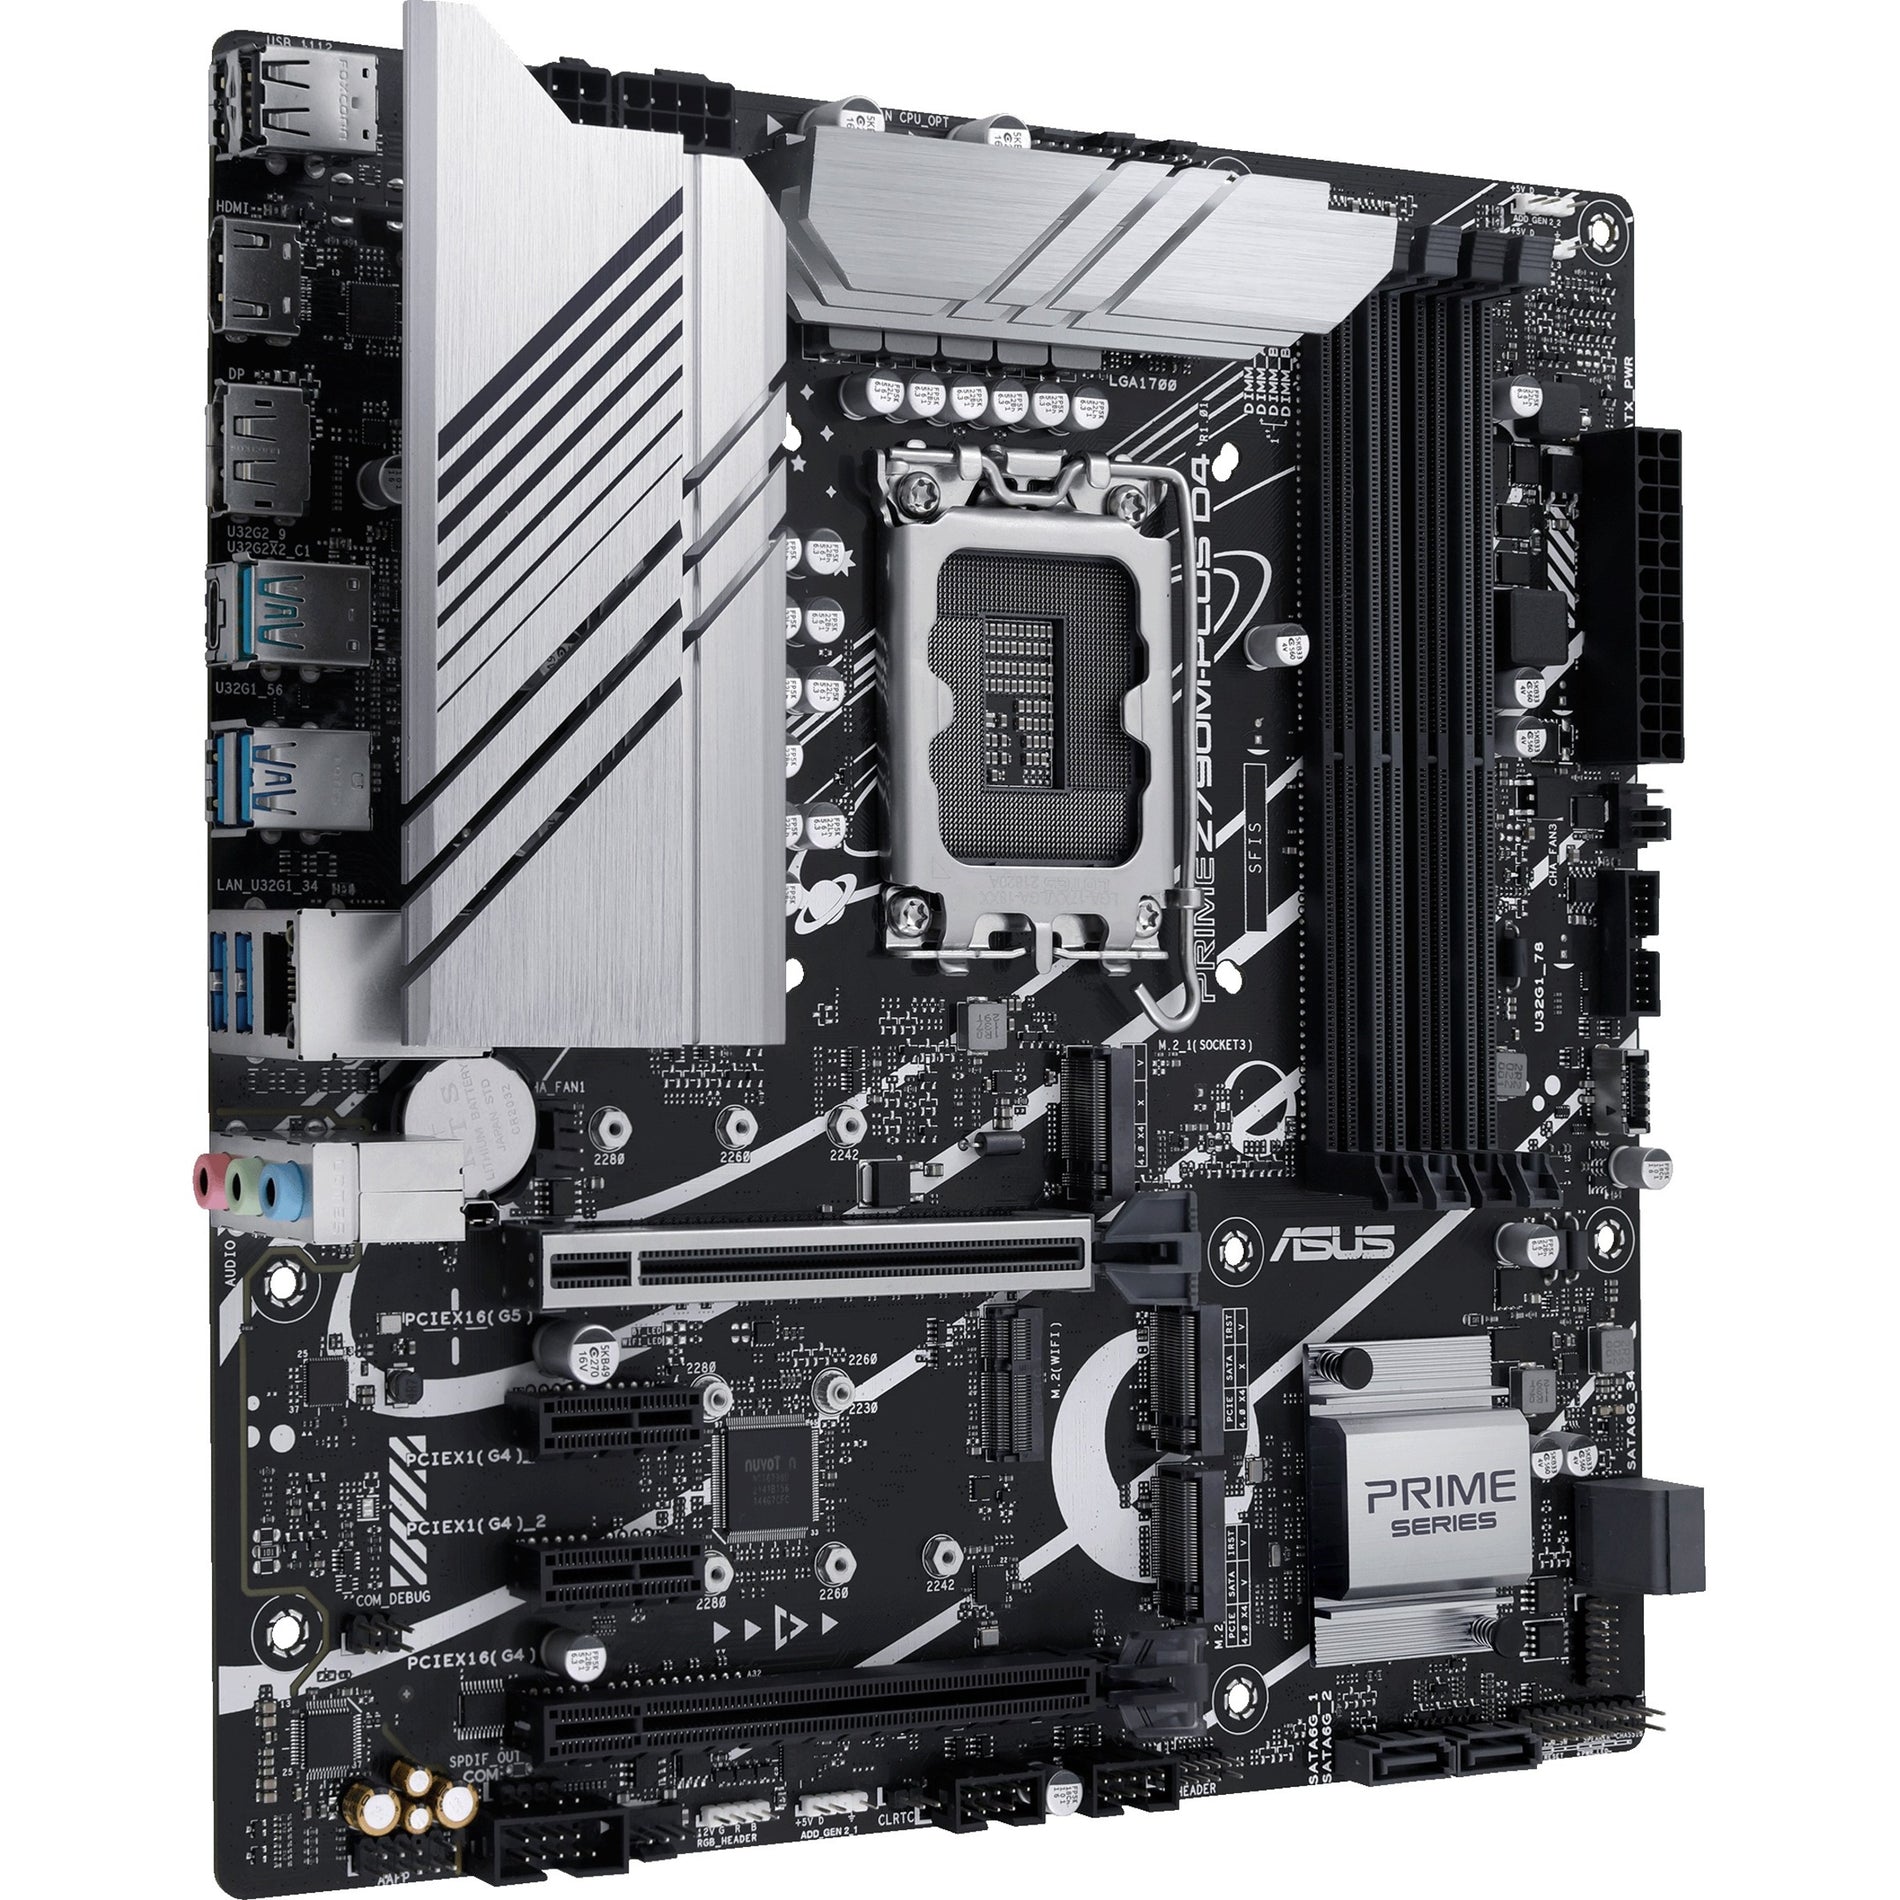 ASUS PRIMEZ790M-PLUSD4 Gaming Desktop Motherboard PCIe 5.0, 3xM.2 slots, 10+1 DrMOS, DDR4, 1 Gb LAN, DP, USB 3.2 Gen 2x2 Type-C, Thunderbolt (USB4) support